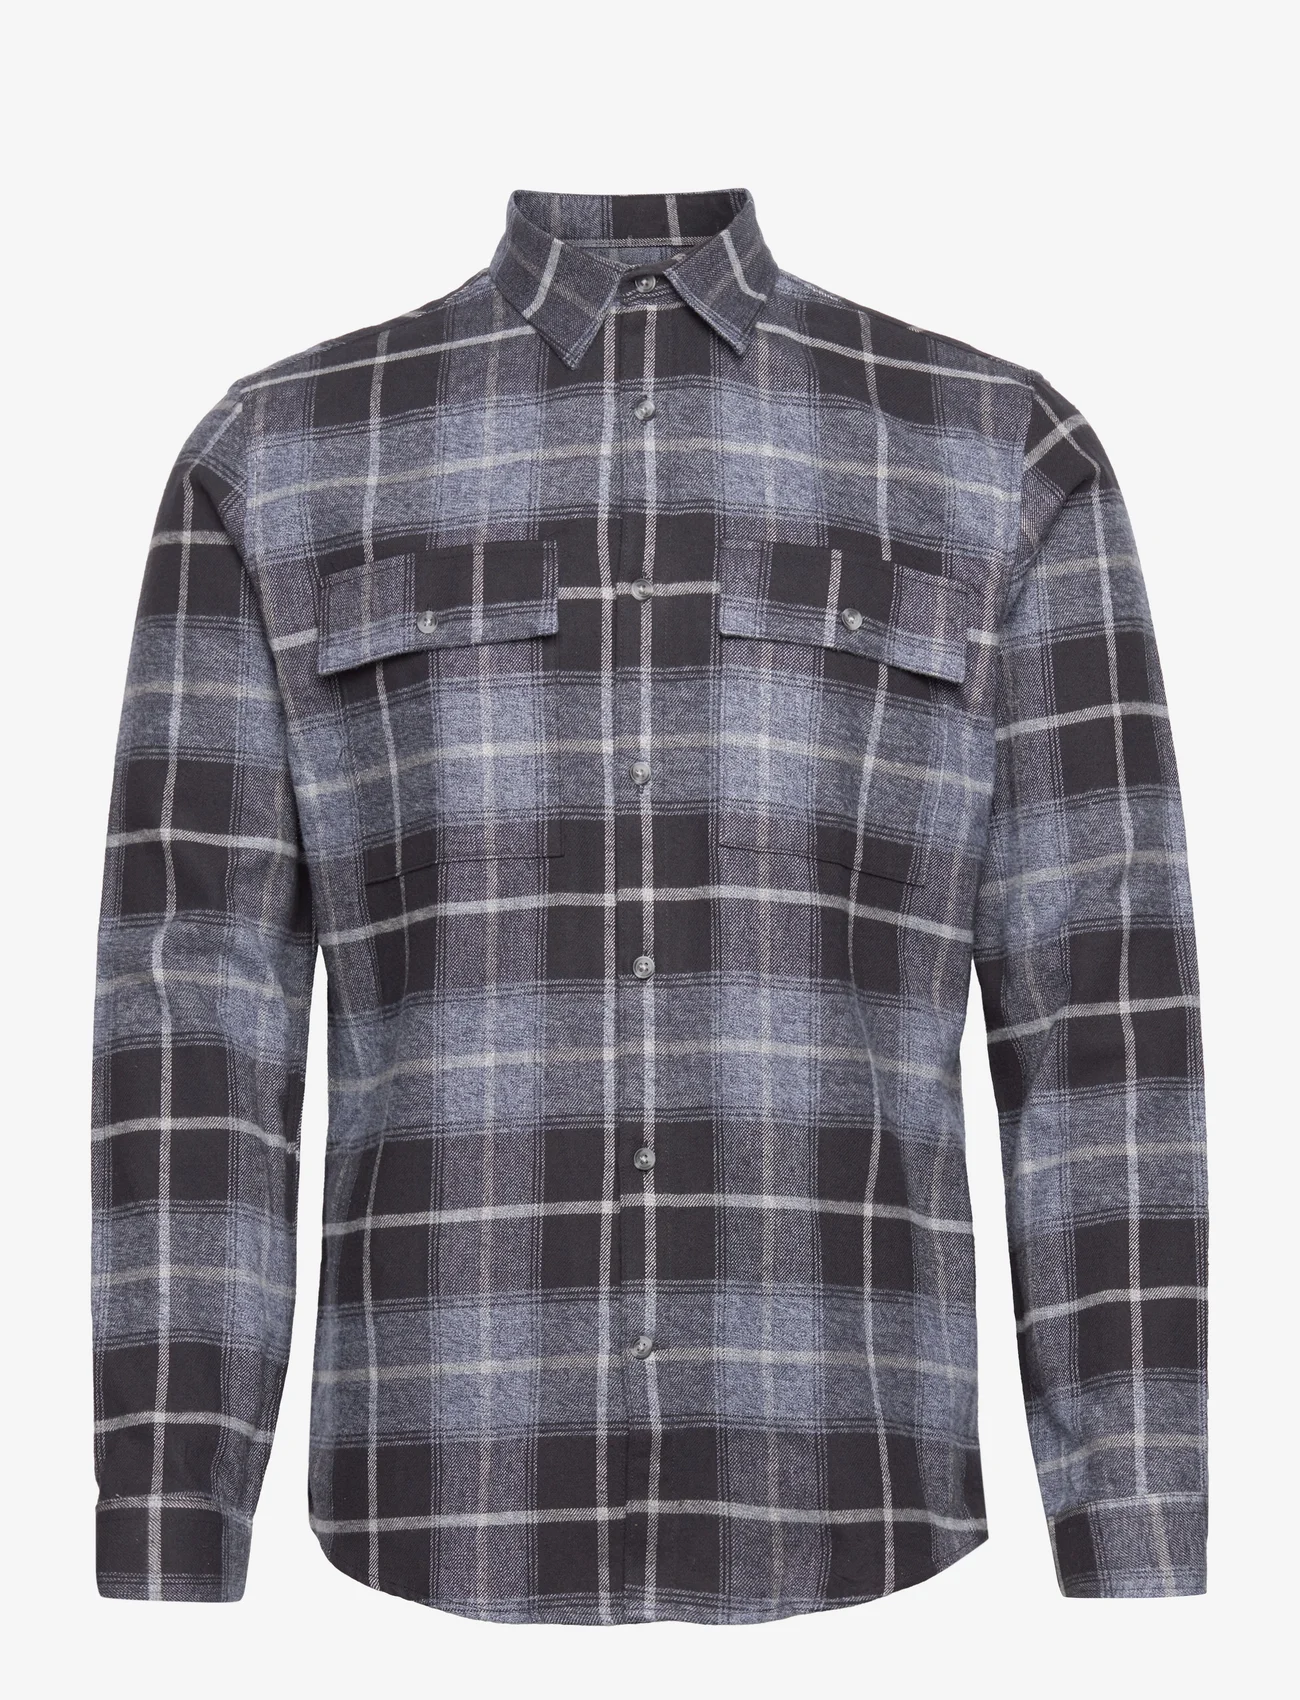 Lindbergh - Checked flannel shirt L/S - geruite overhemden - dark blue - 0